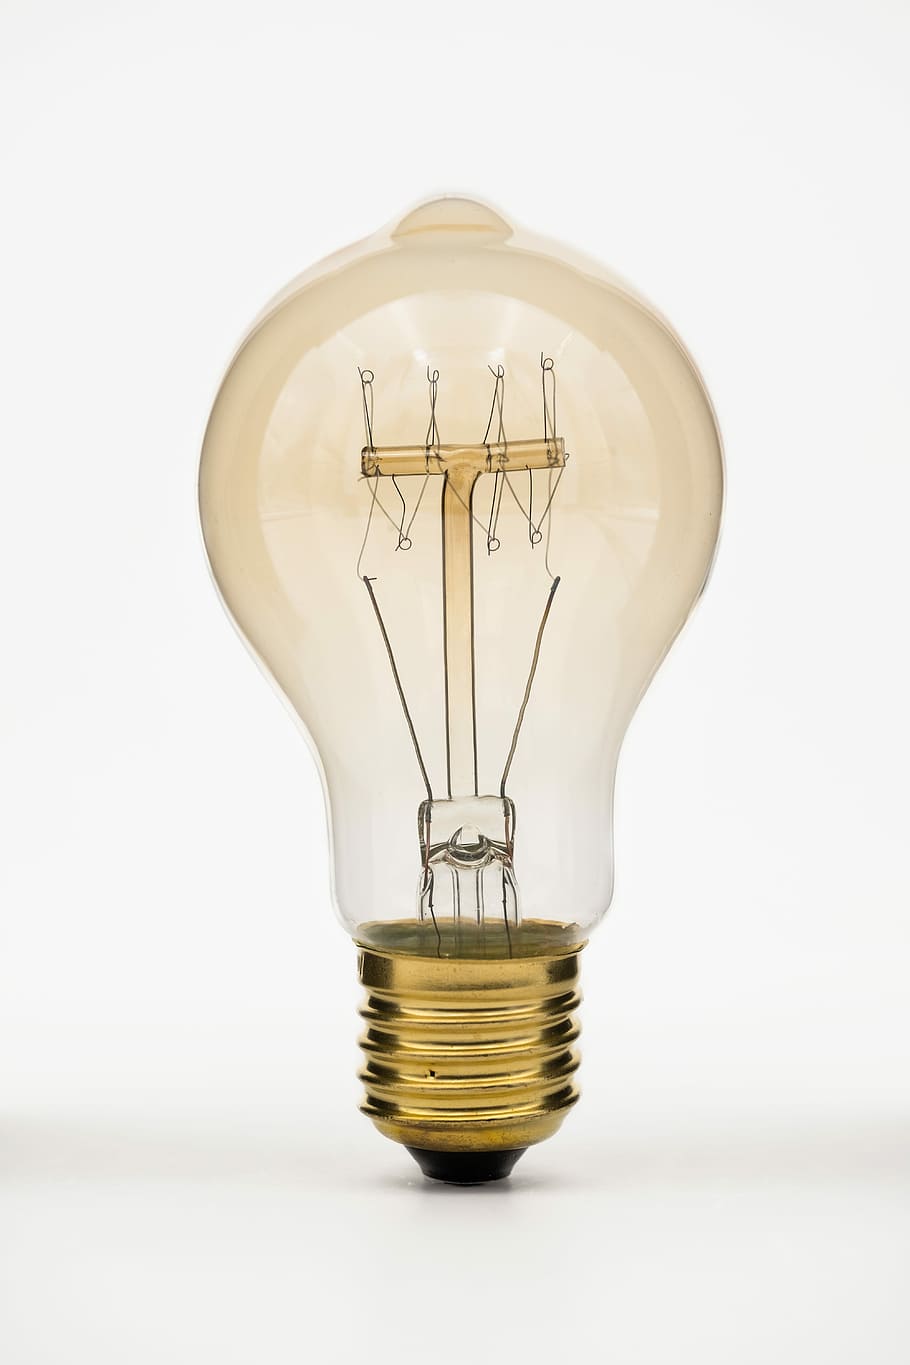 Edison bulb, bulbs, light bulb, lamp, tungsten, glow wire, disappearing